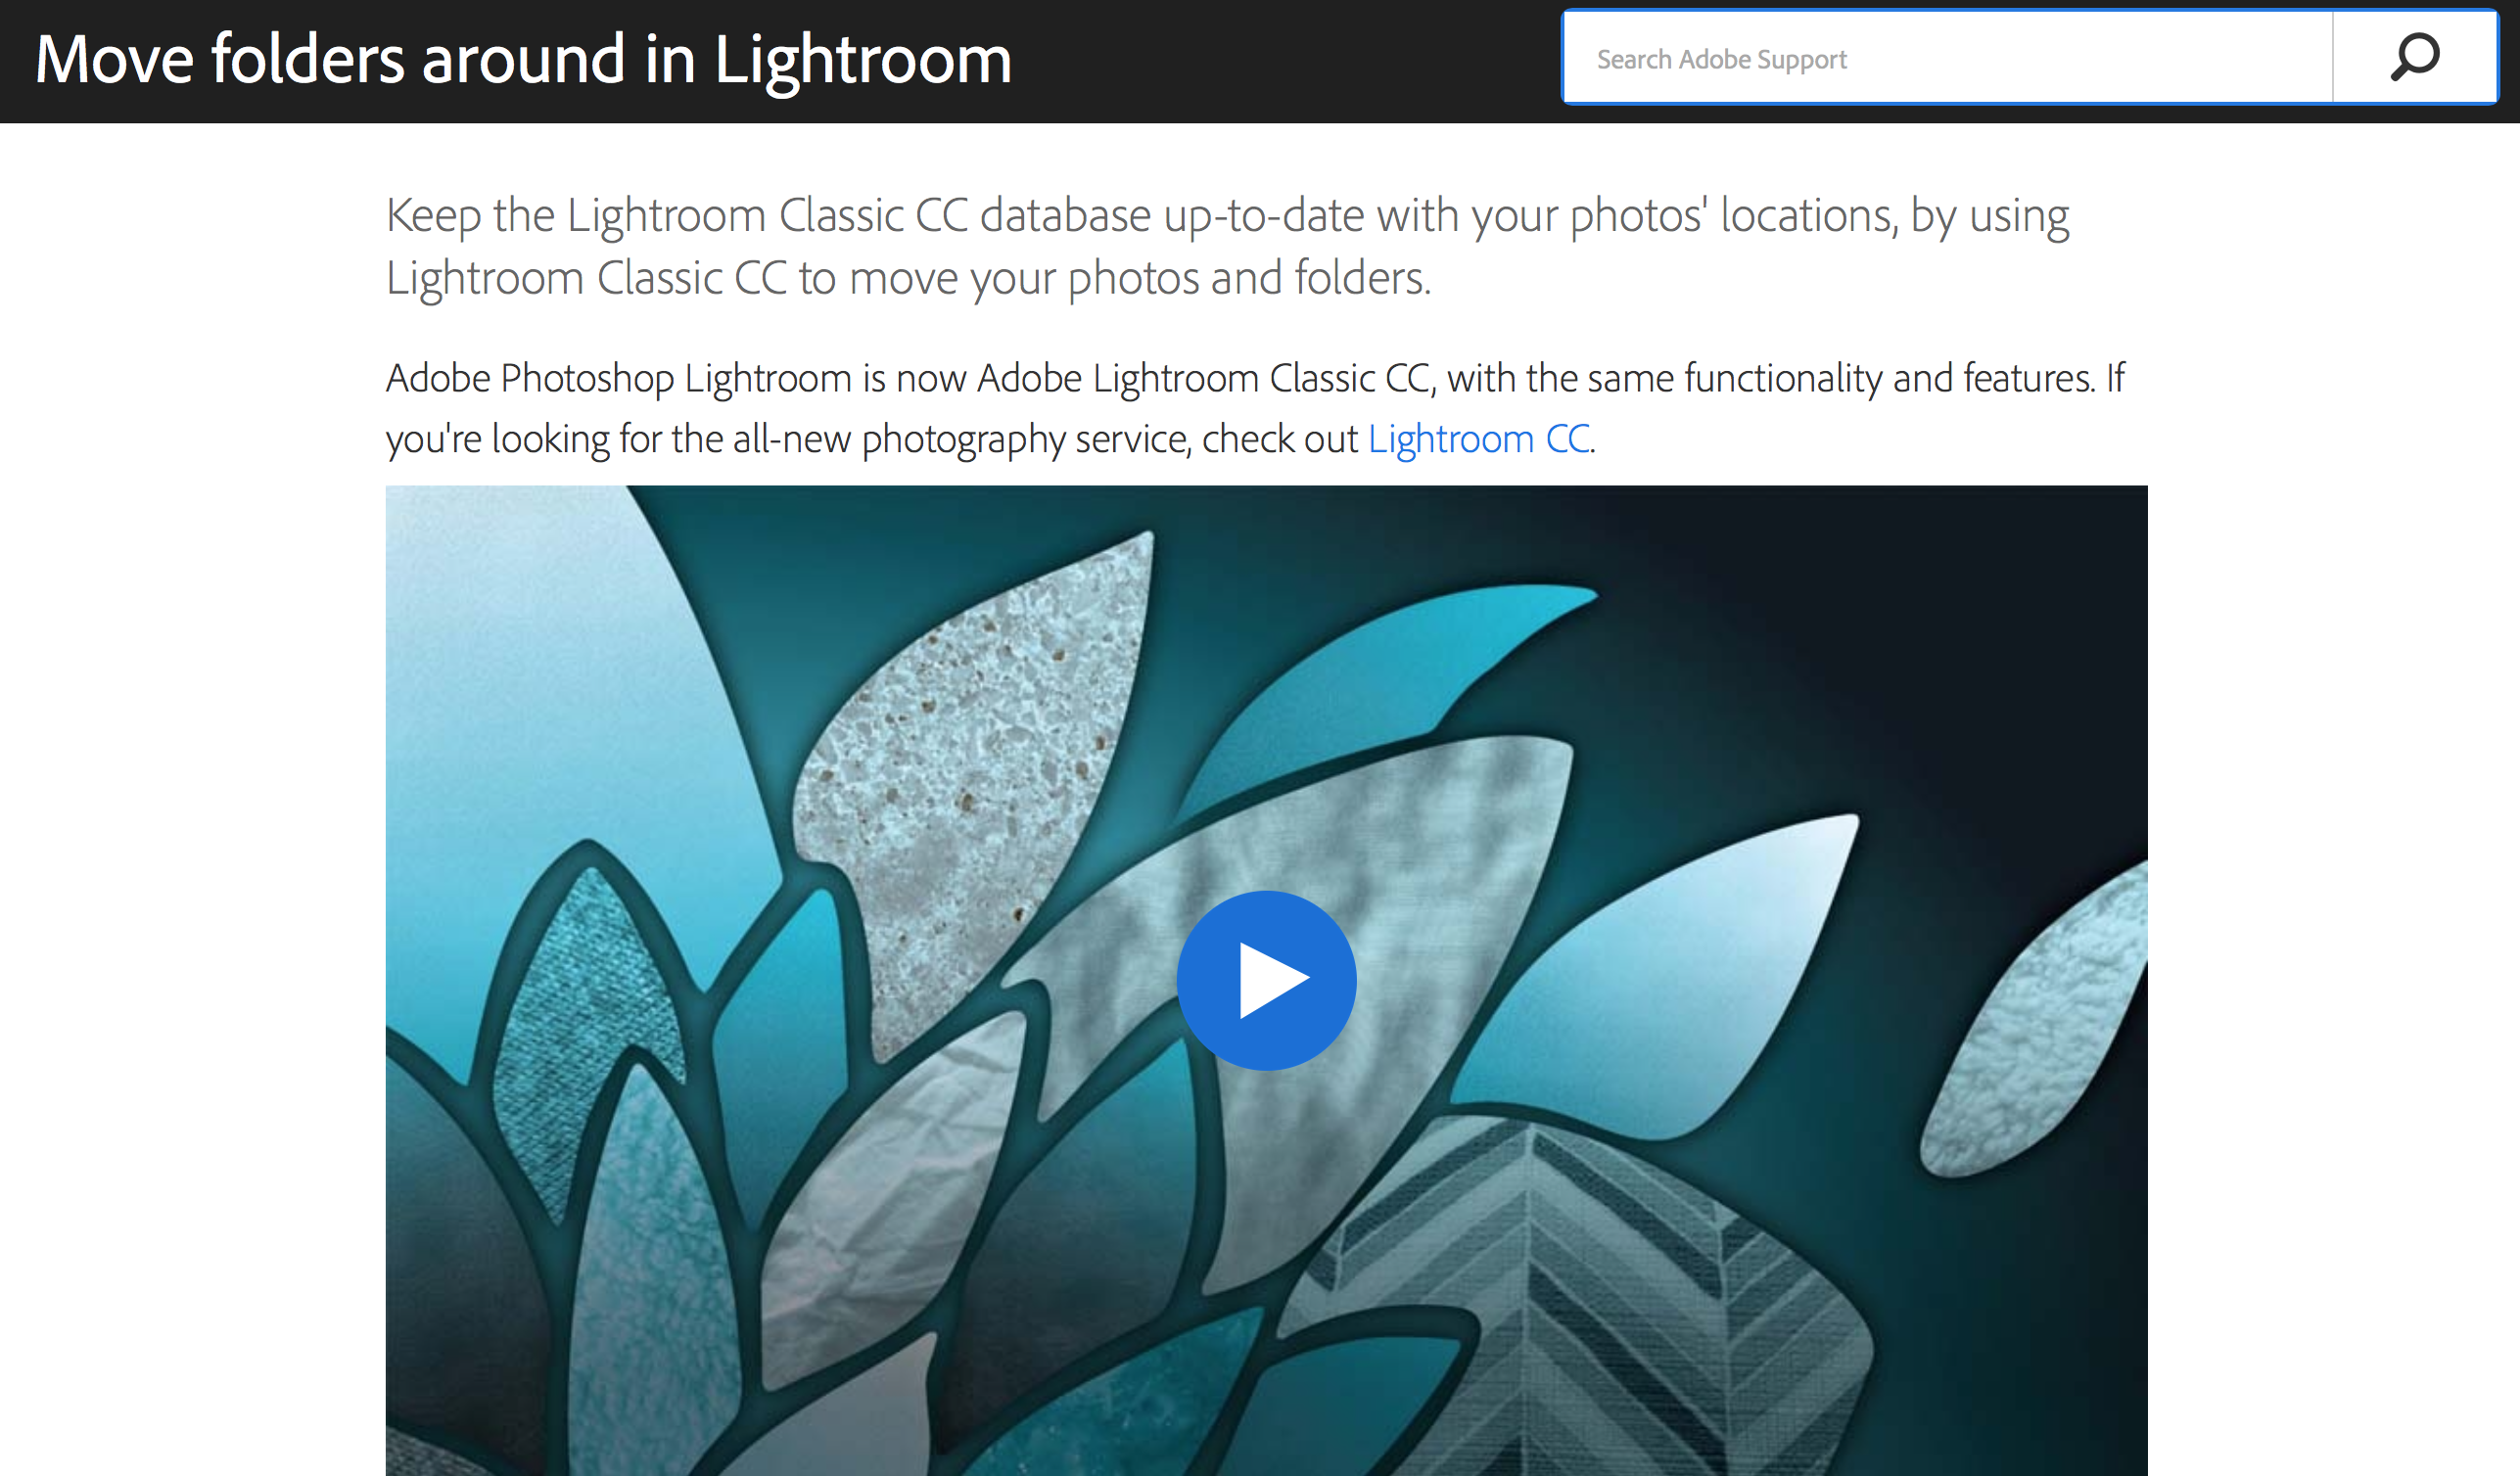 Move_folders_around_in_Lightroom___Adobe_Photoshop_Lightroom_CC_tutorials.png